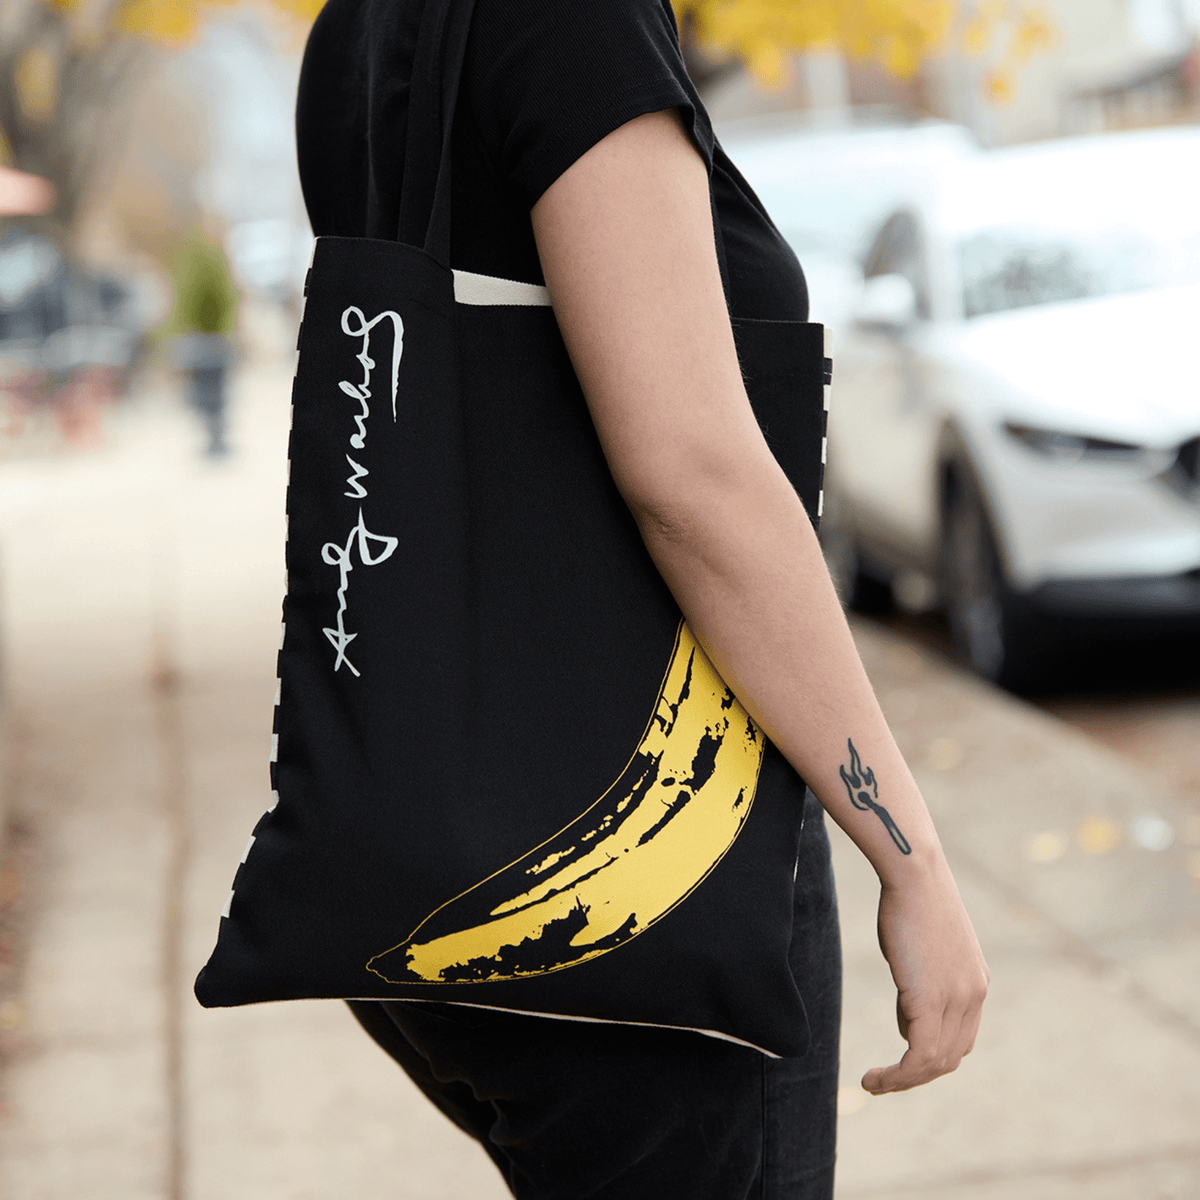 Warhol Banana Canvas Tote Bag - Black Reusable Tote Andy Warhol Foundation For The Visual Arts 